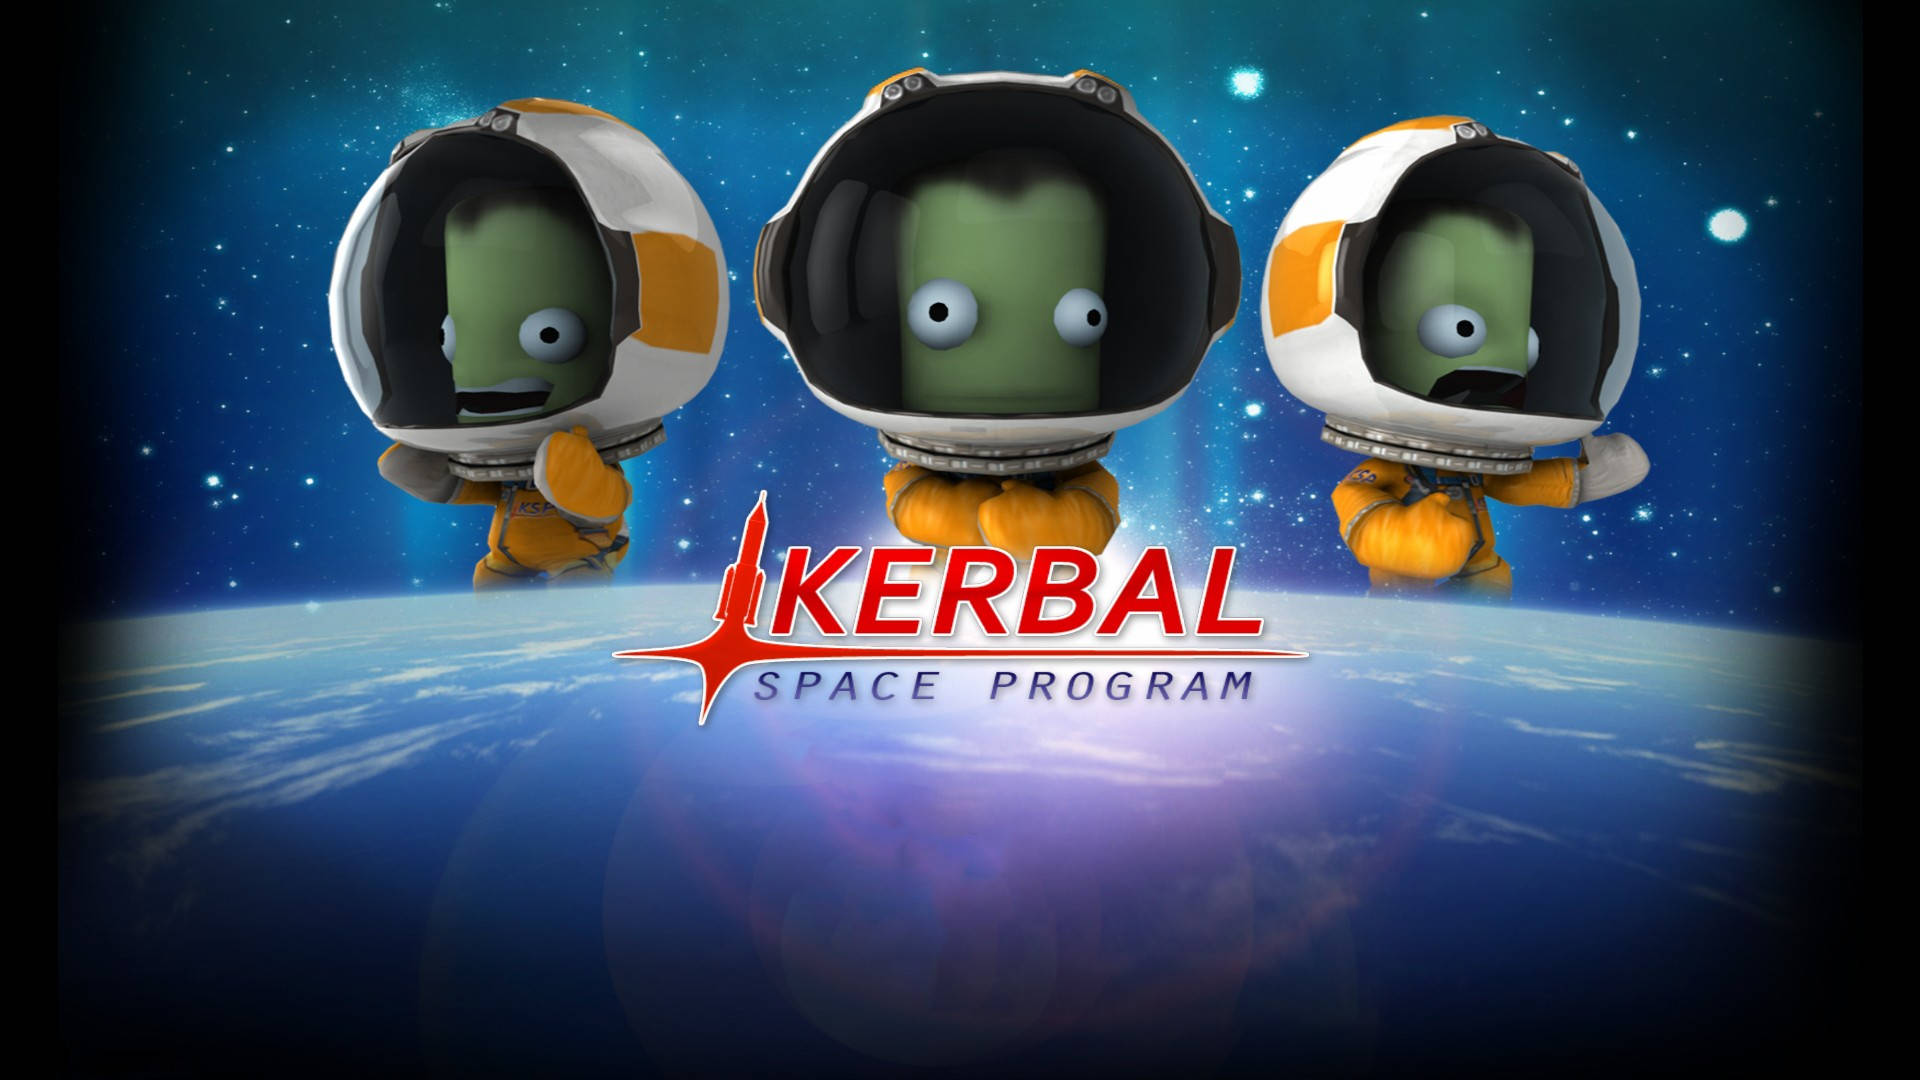 Kerbal Space Program Poster Background